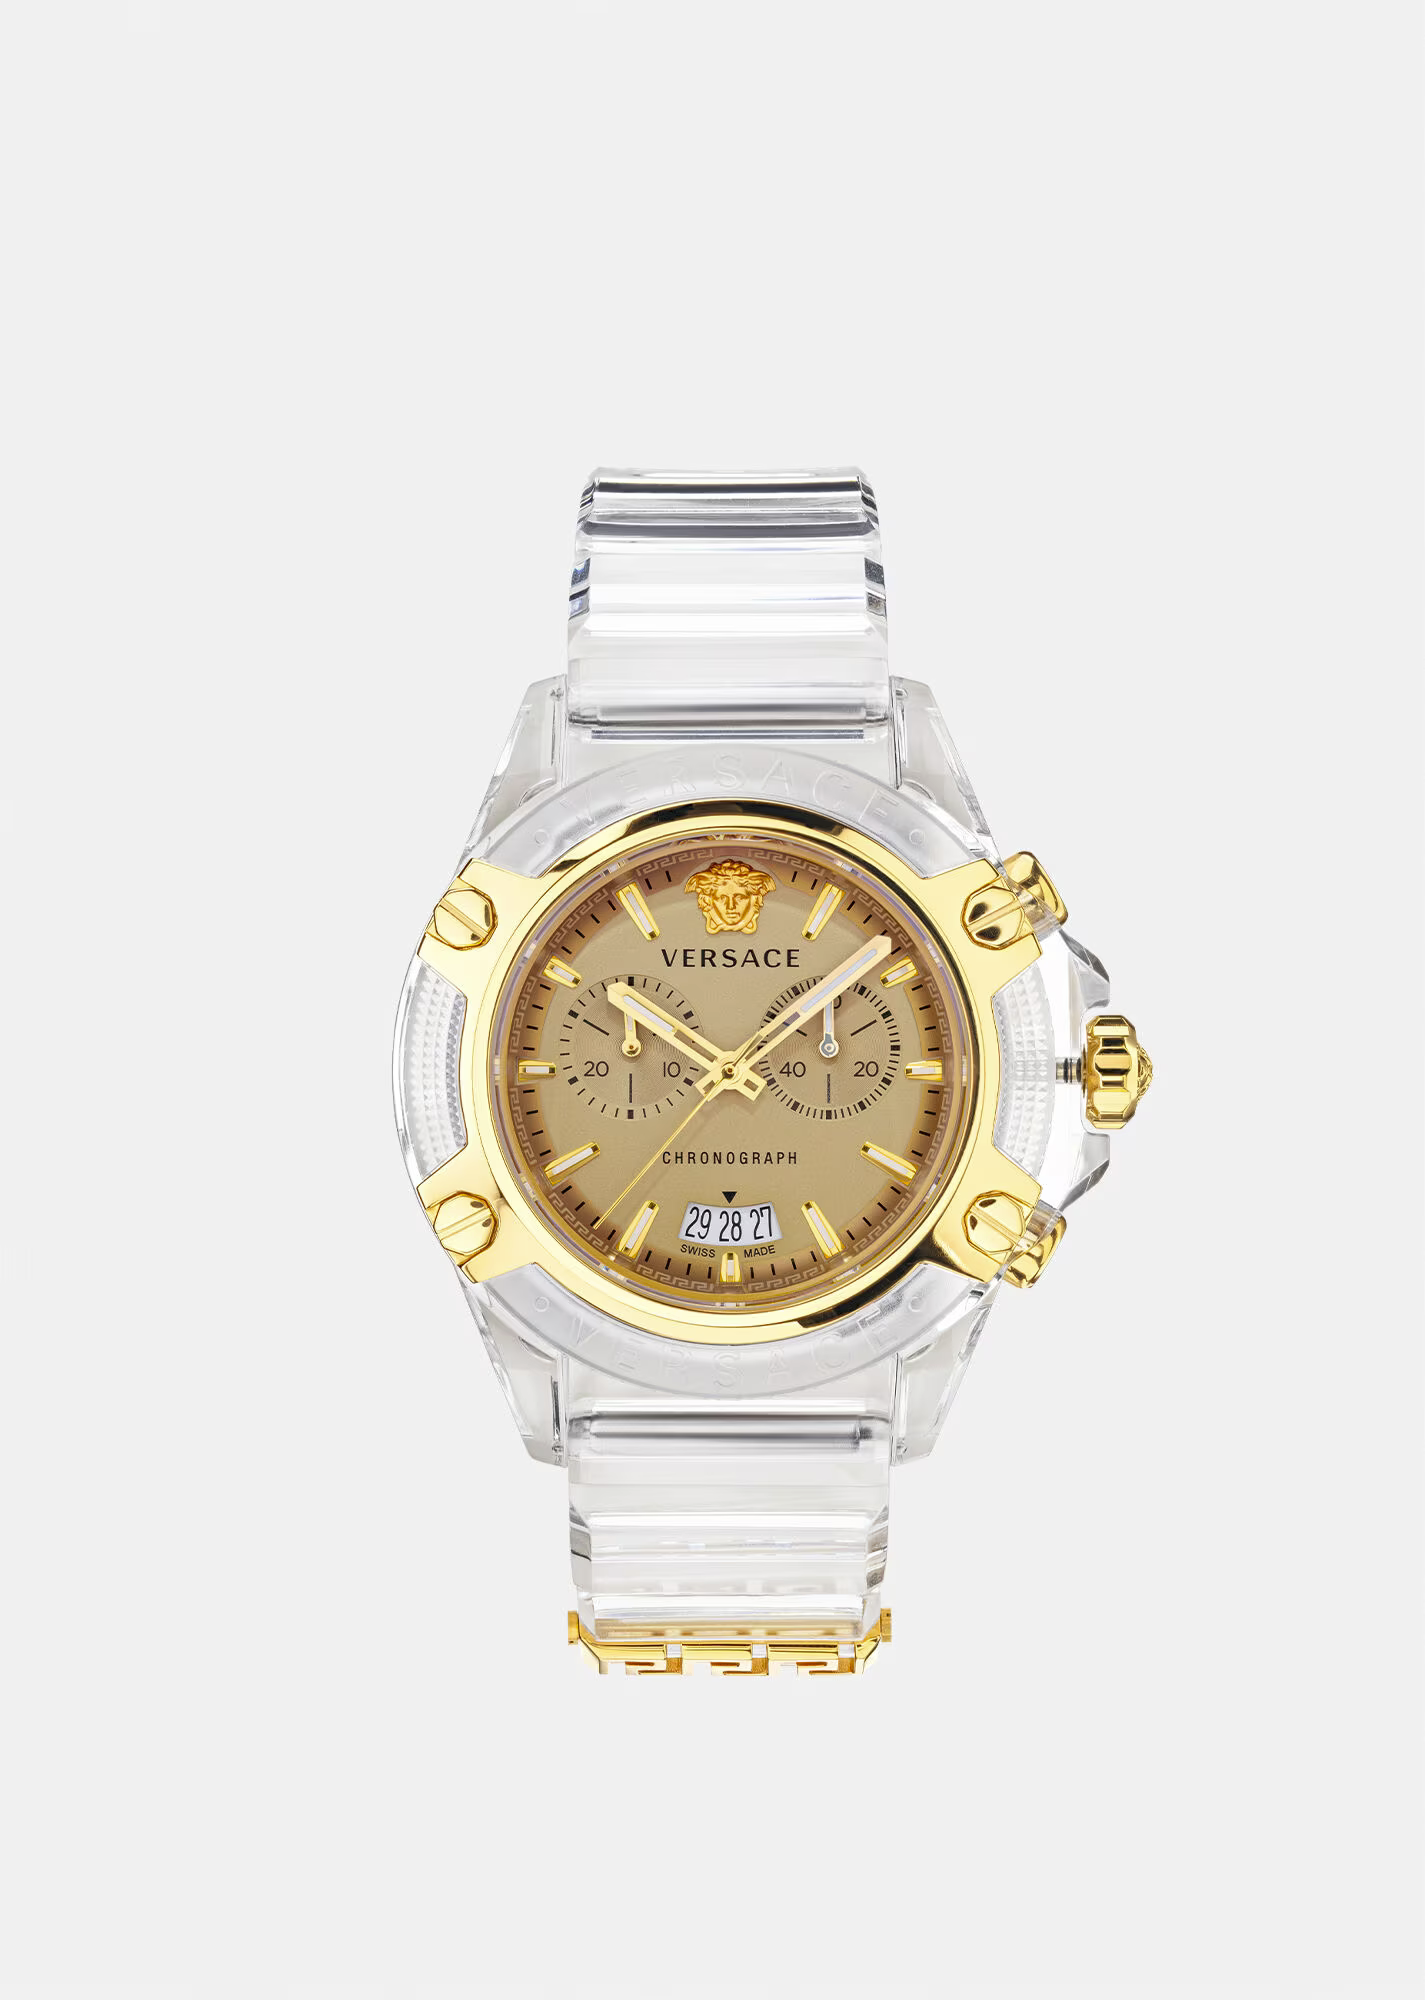 90 pvez7001 p0021 pnul 20 iconactivewatch watches versace online store 1 1 jpg